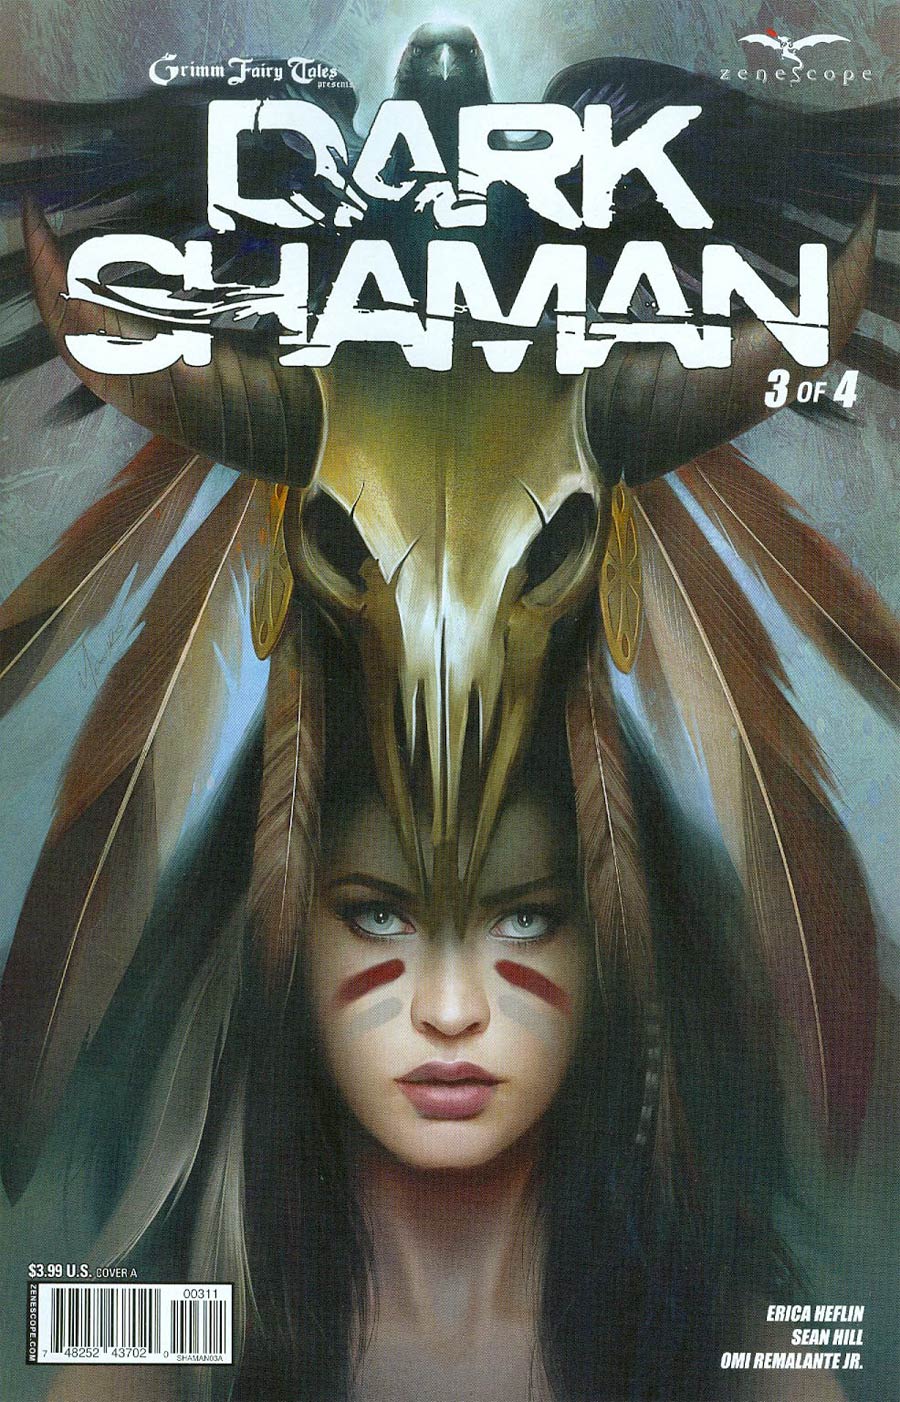 Grimm Fairy Tales Presents Dark Shaman #3 Cover A Jorge Meguro